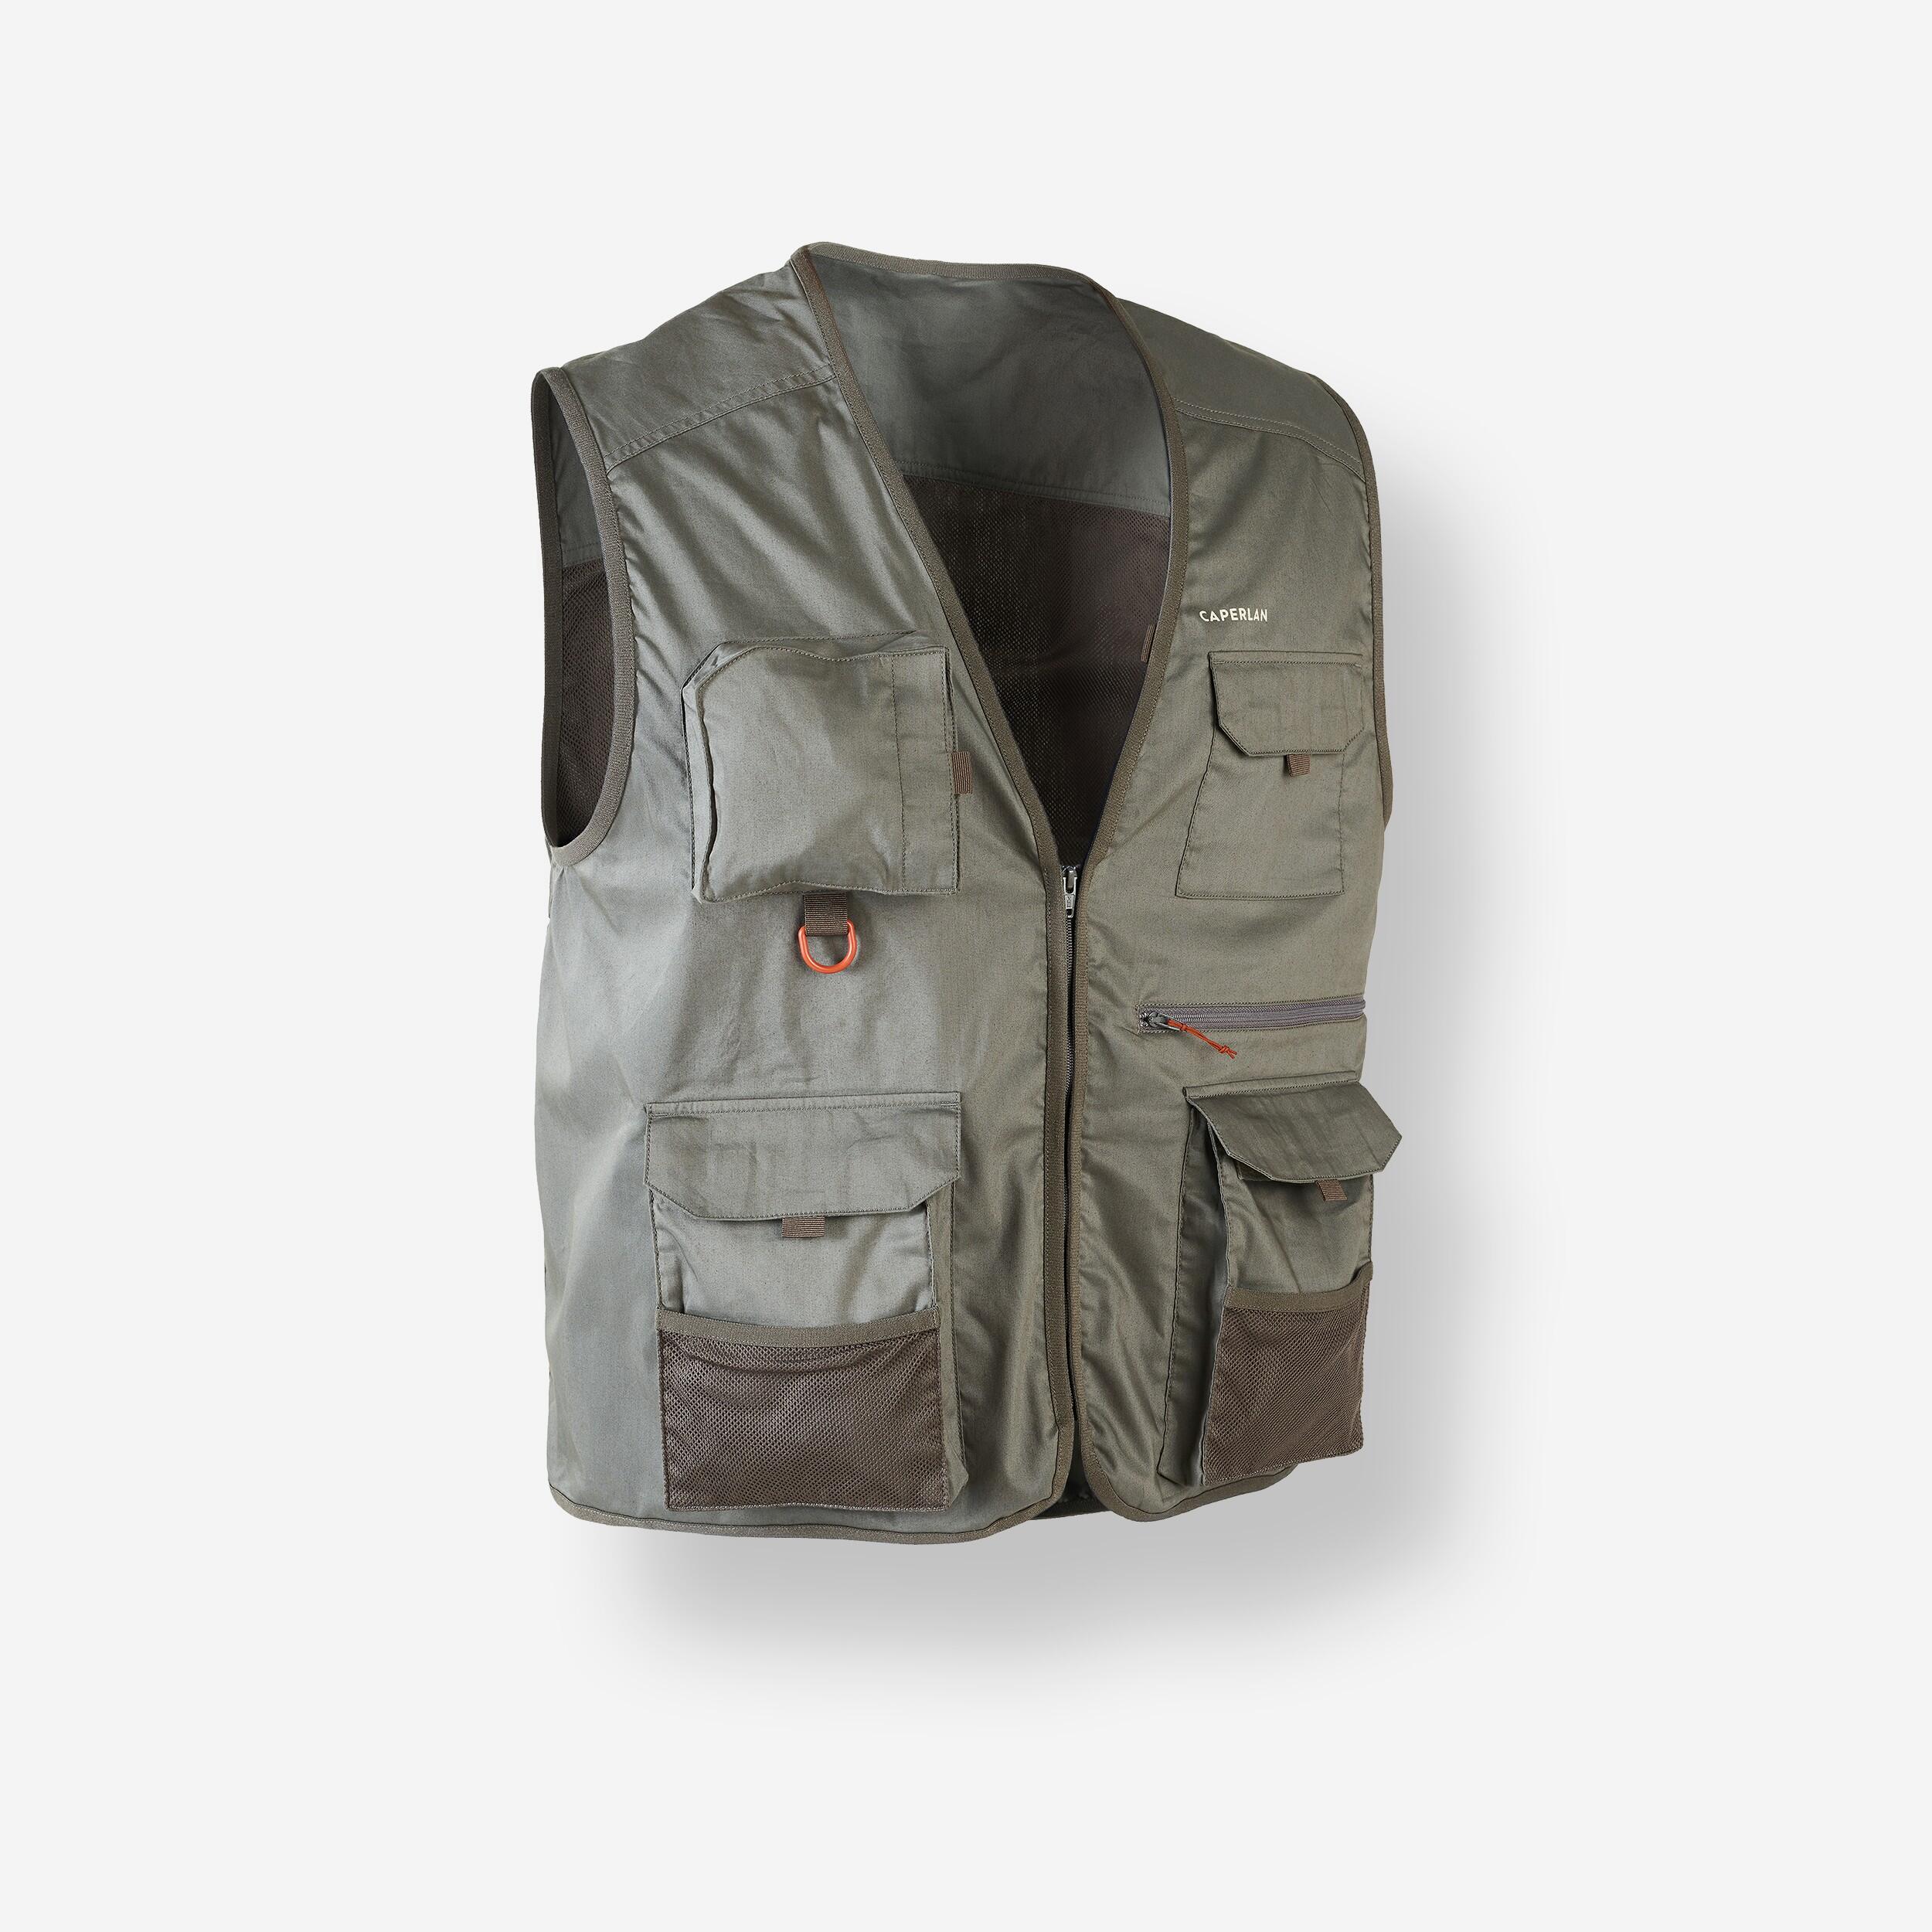 Cabela's Men's Multi Pocket Fly Fishing Vest, Size L, Light Khaki